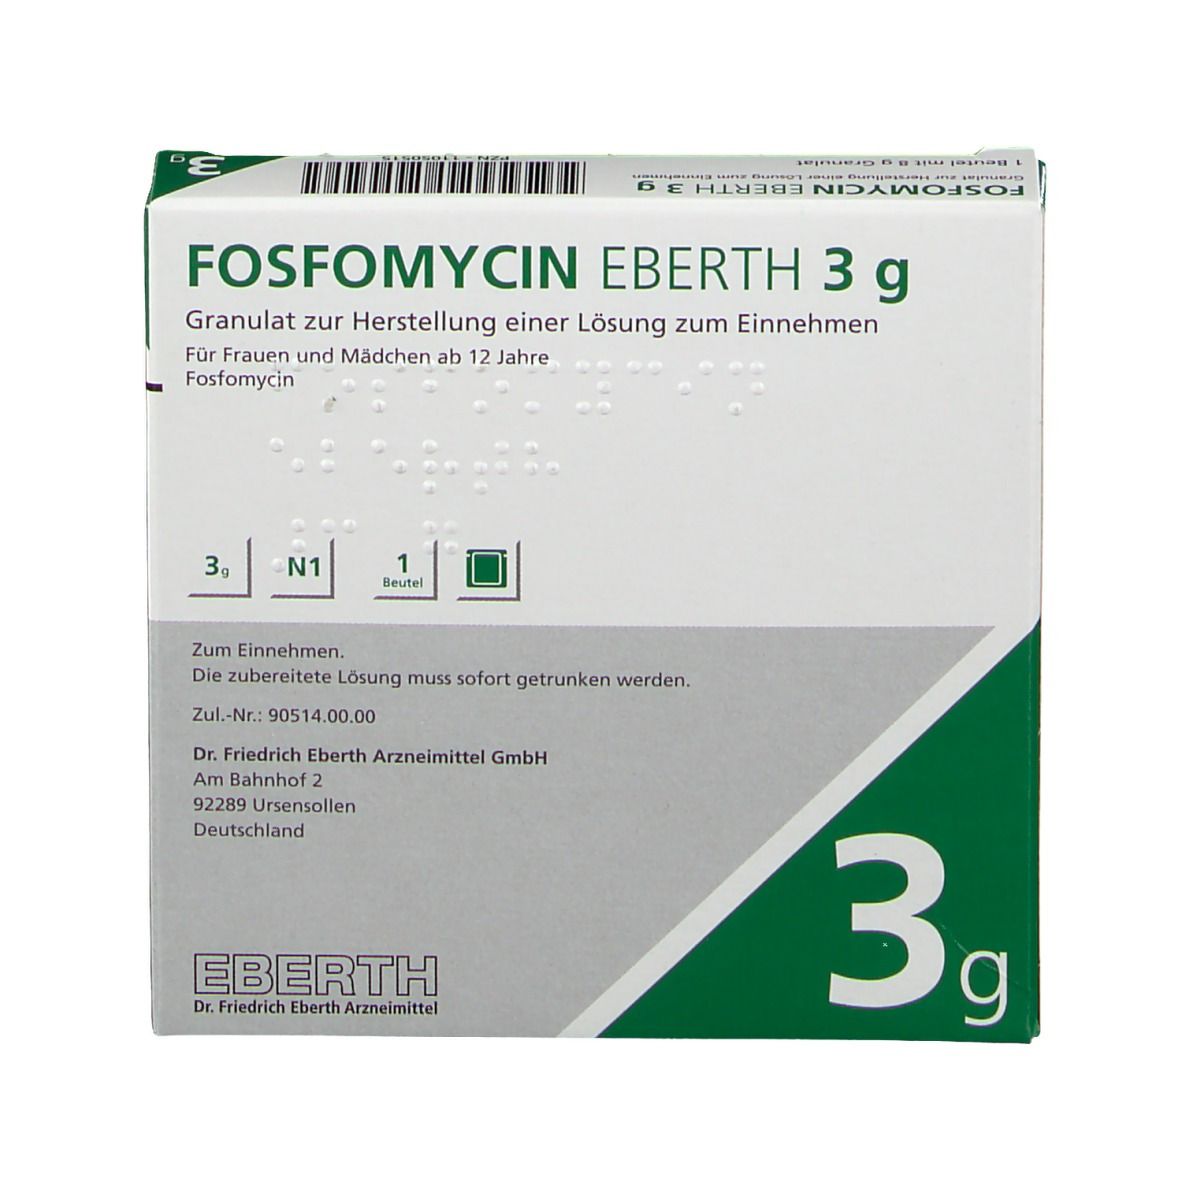 FOSFOMYCIN EBERTH 3 g